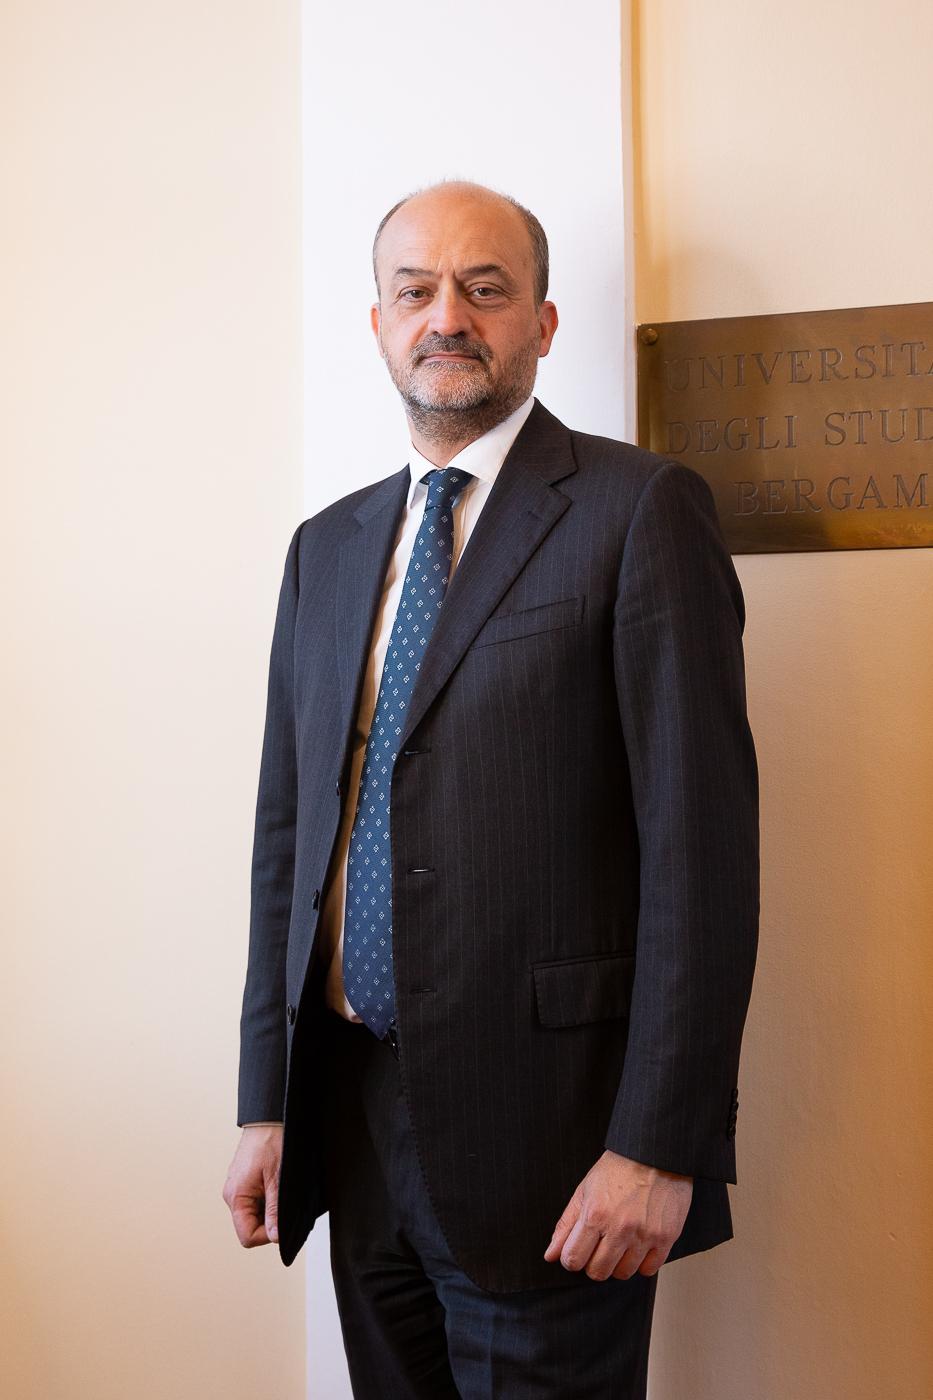 Prof. Sergio Cavalieri